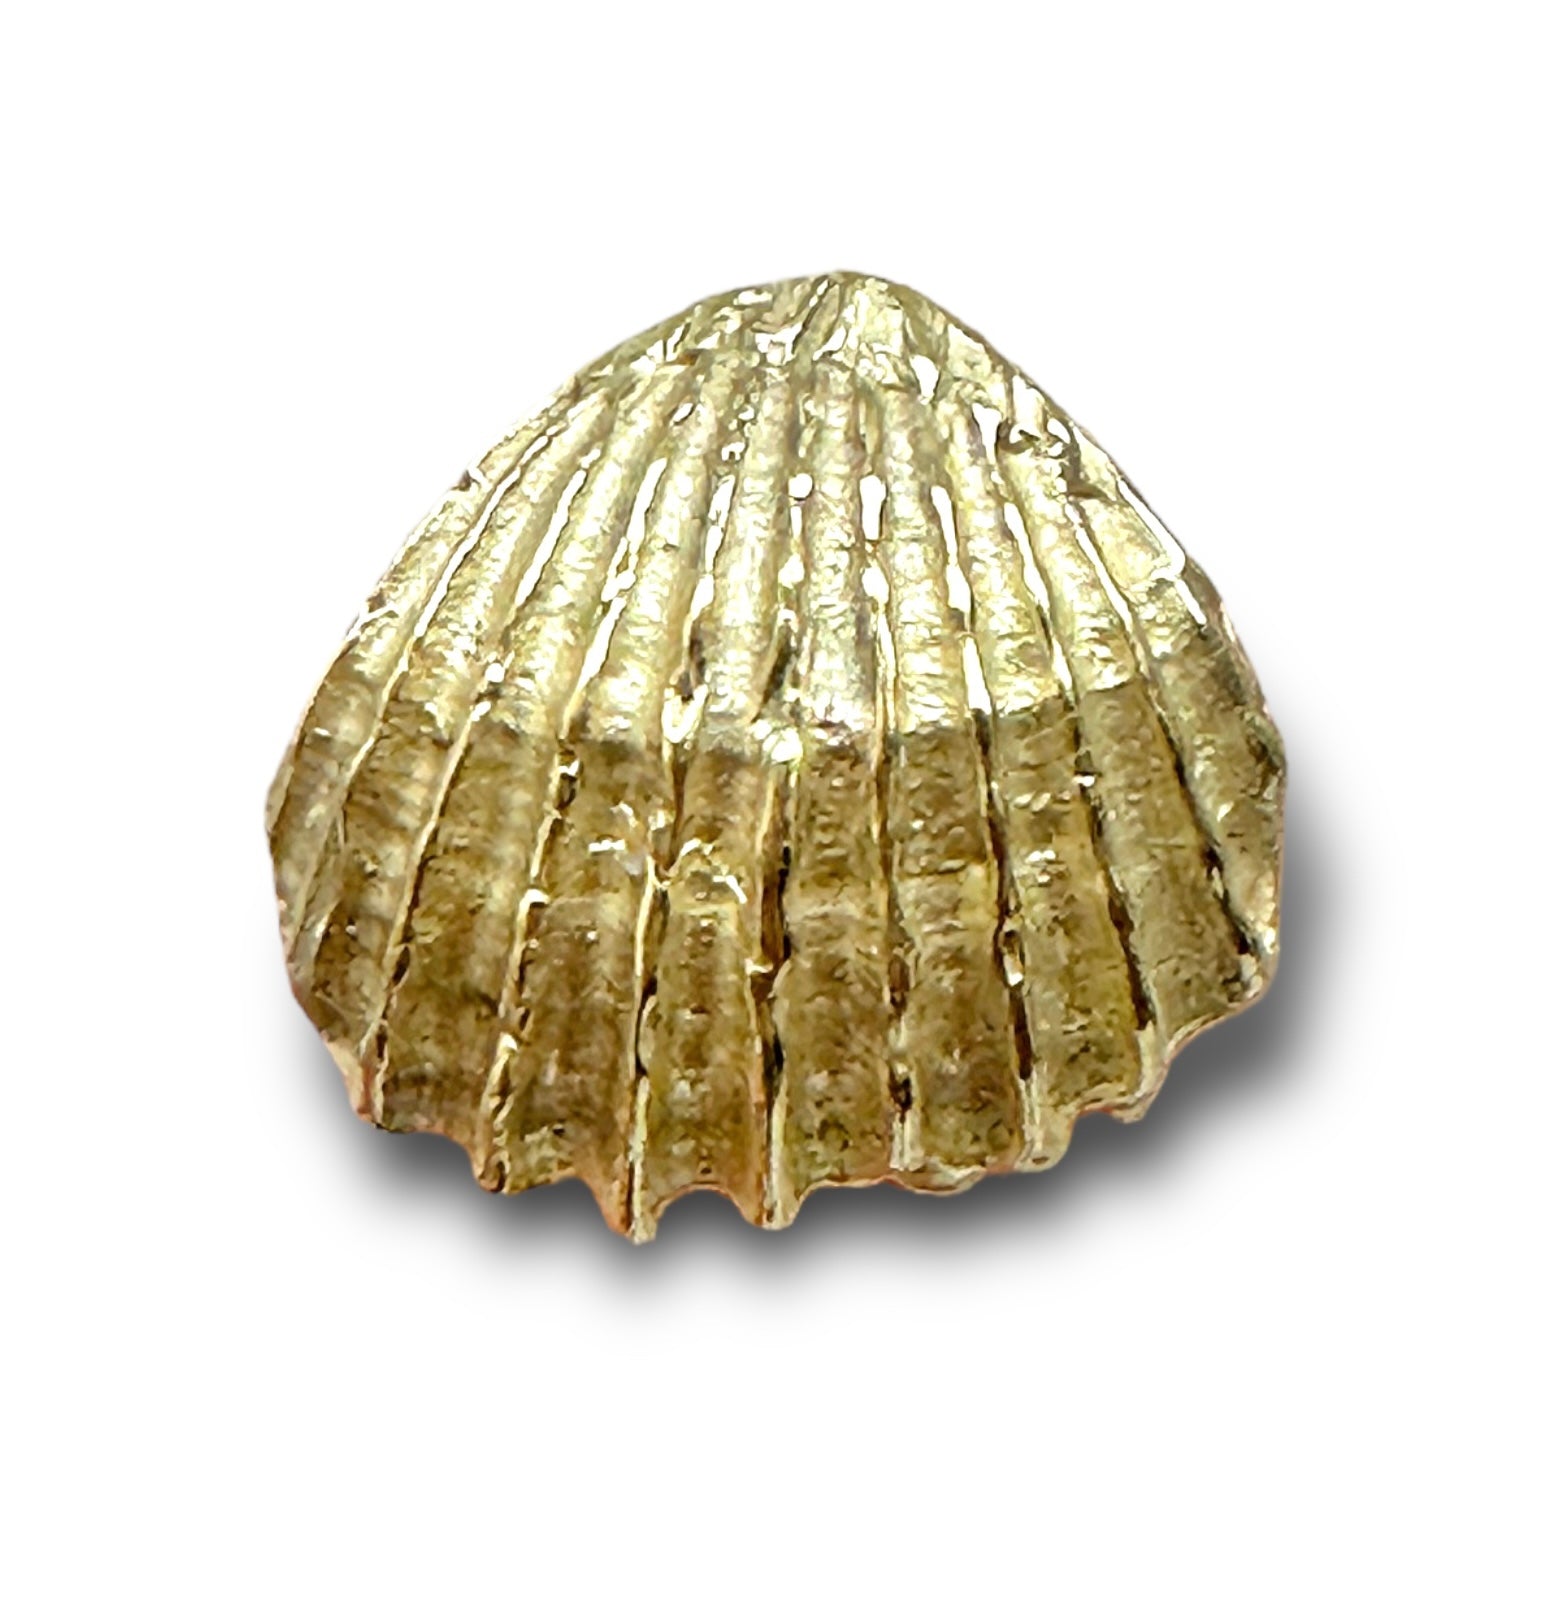 18K Yellow Gold Sea Spiral Snail Earring Stud